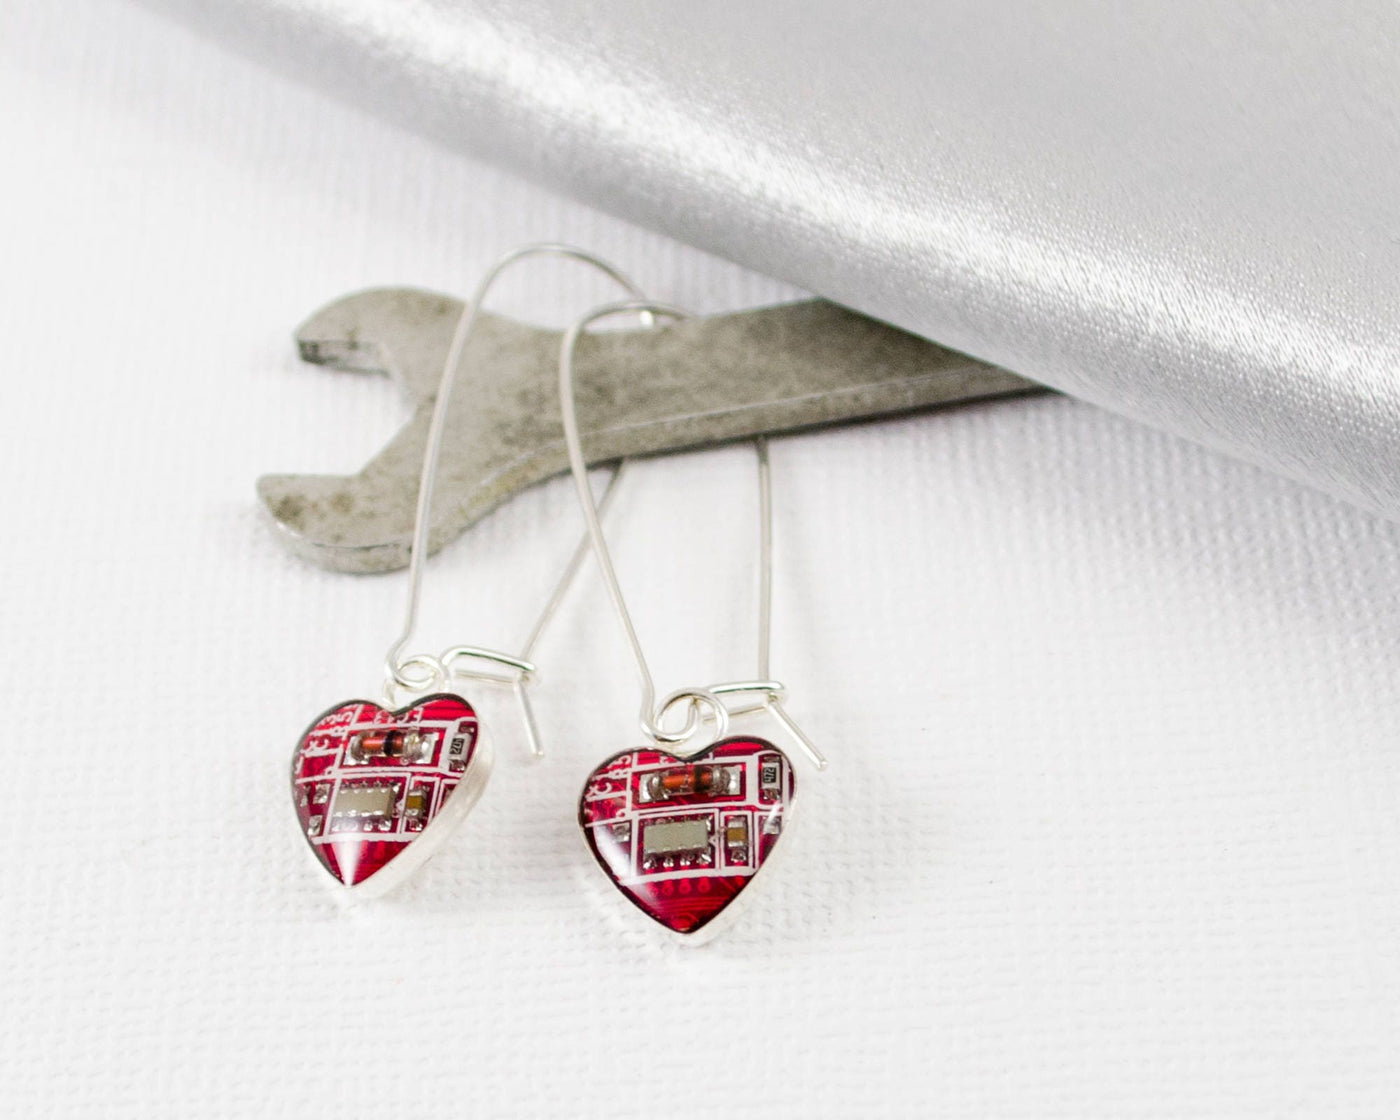 Circuit Board Earrings Small Red Hearts, Sterling Silver Dangle Earrings, Wearable Technology, Geek Earrings Gift, Geeky Valentines Day Gift